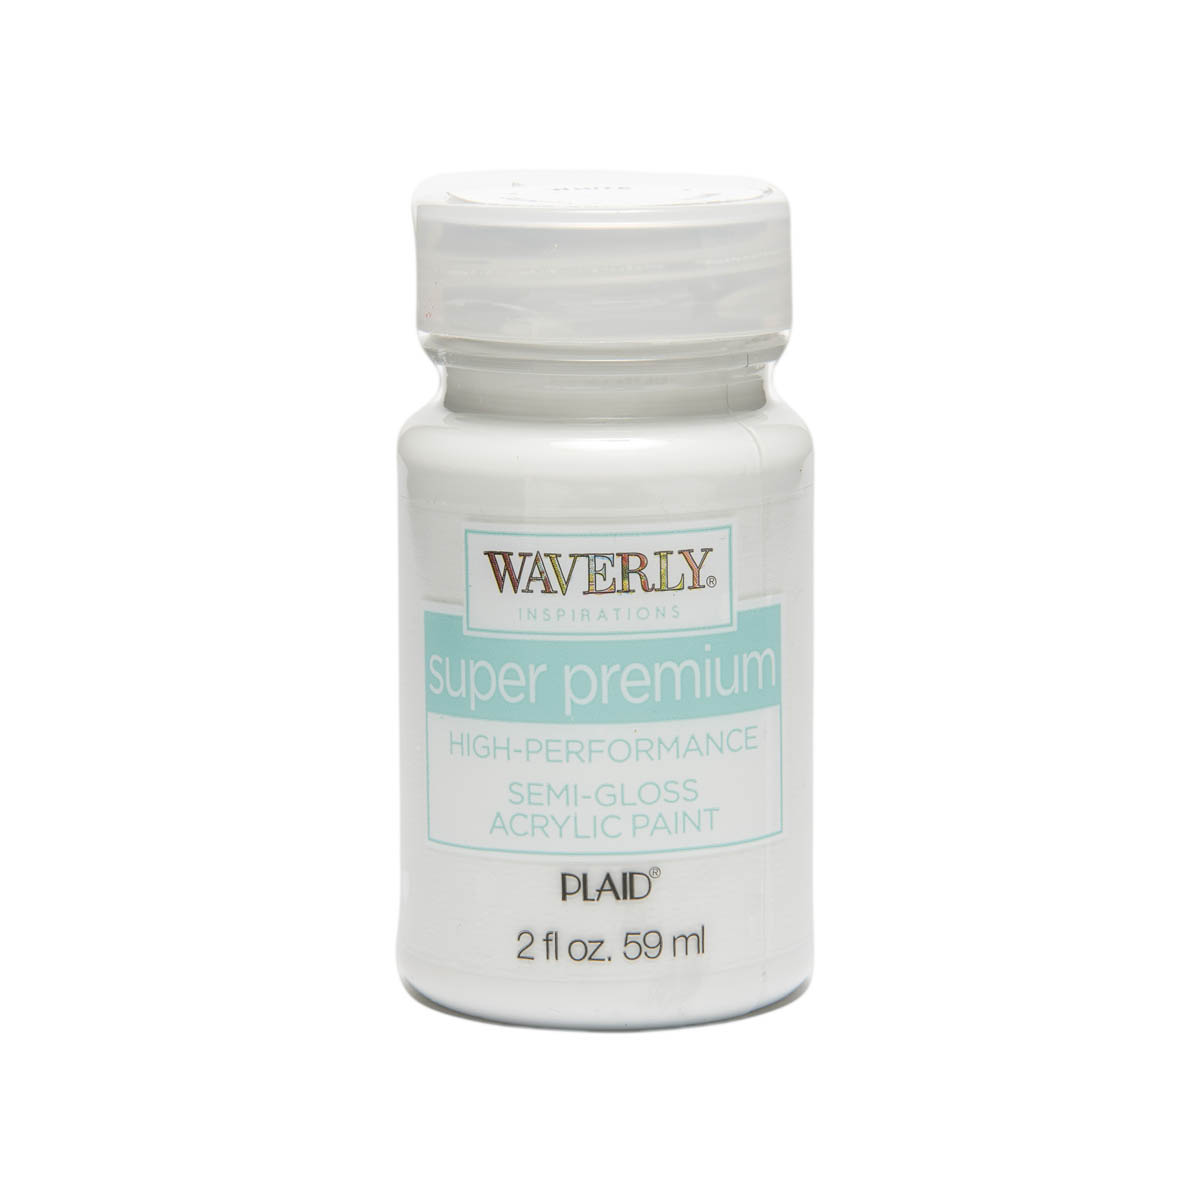 Waverly ® Inspirations Super Premium Semi-Gloss Acrylic Paint - White, 2 oz. - 60598E